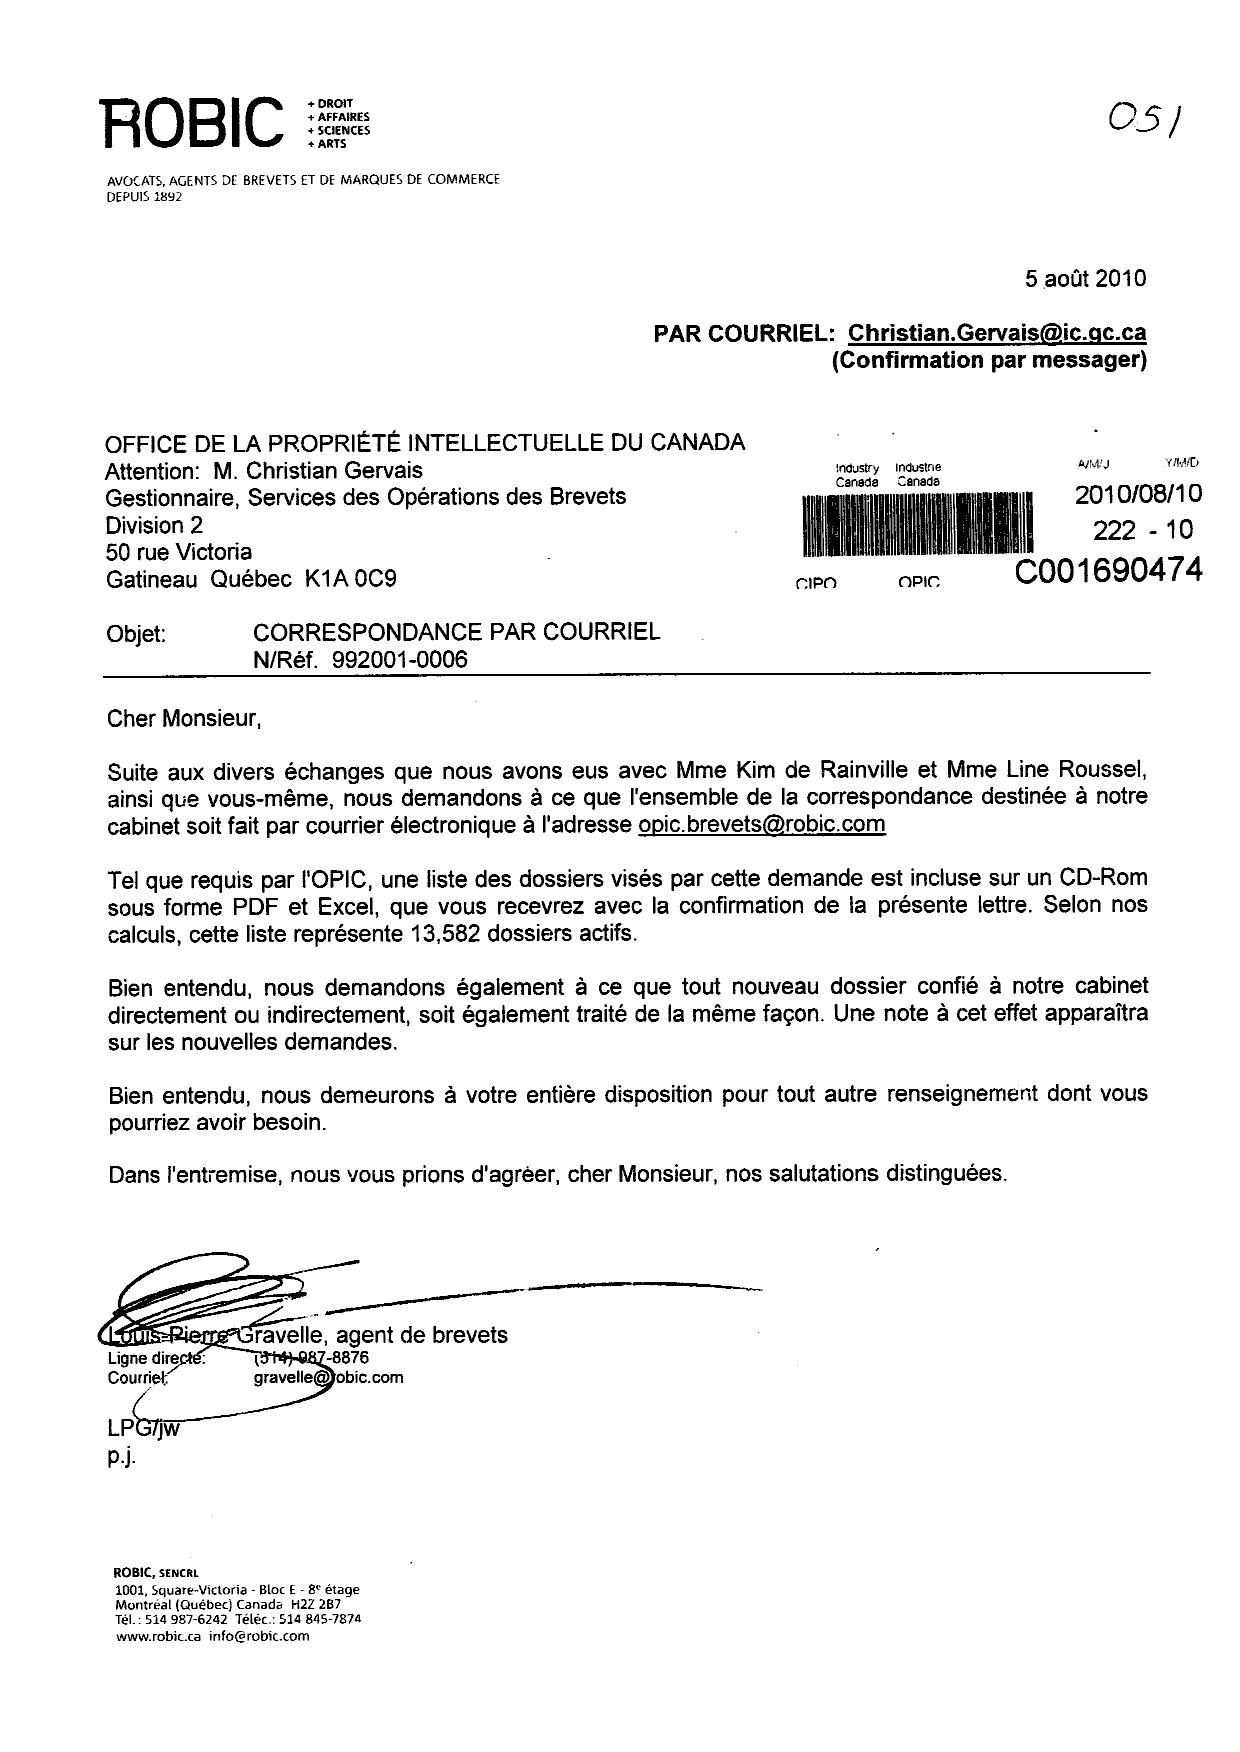 Canadian Patent Document 2301744. Correspondence 20100810. Image 1 of 1